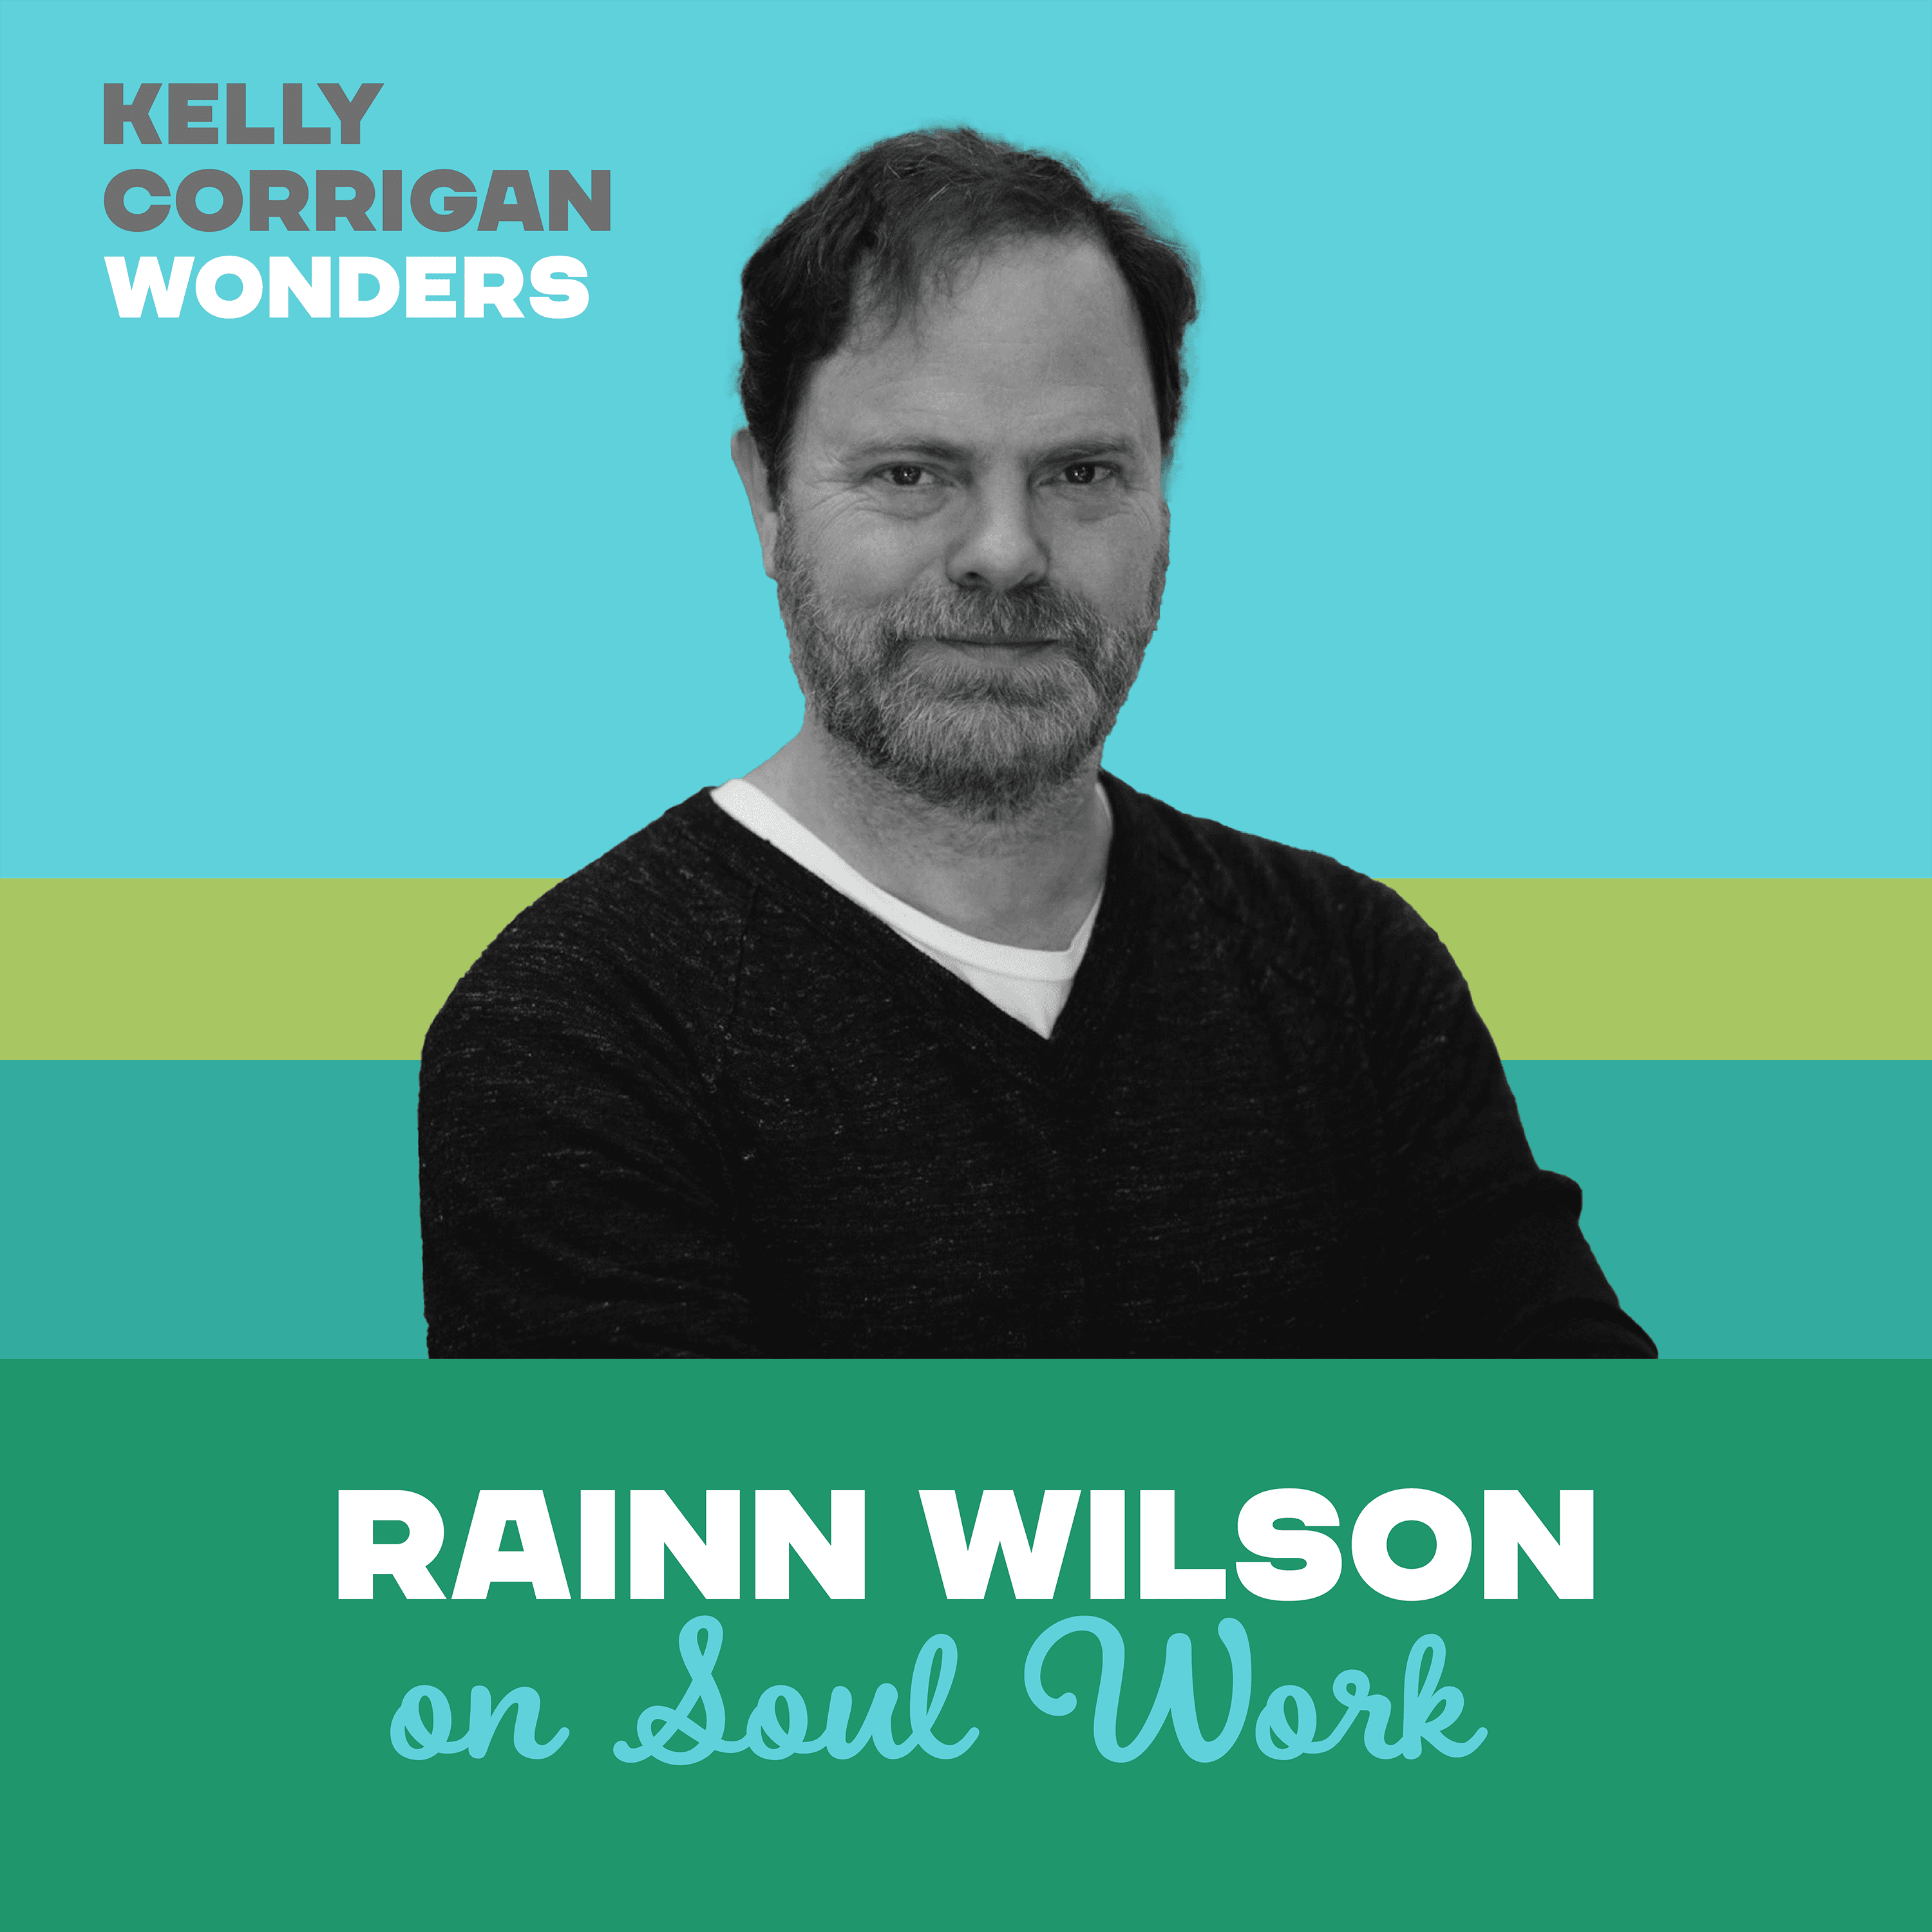 Thumbnail for "Going Deep with Rainn Wilson on Spirituality ".